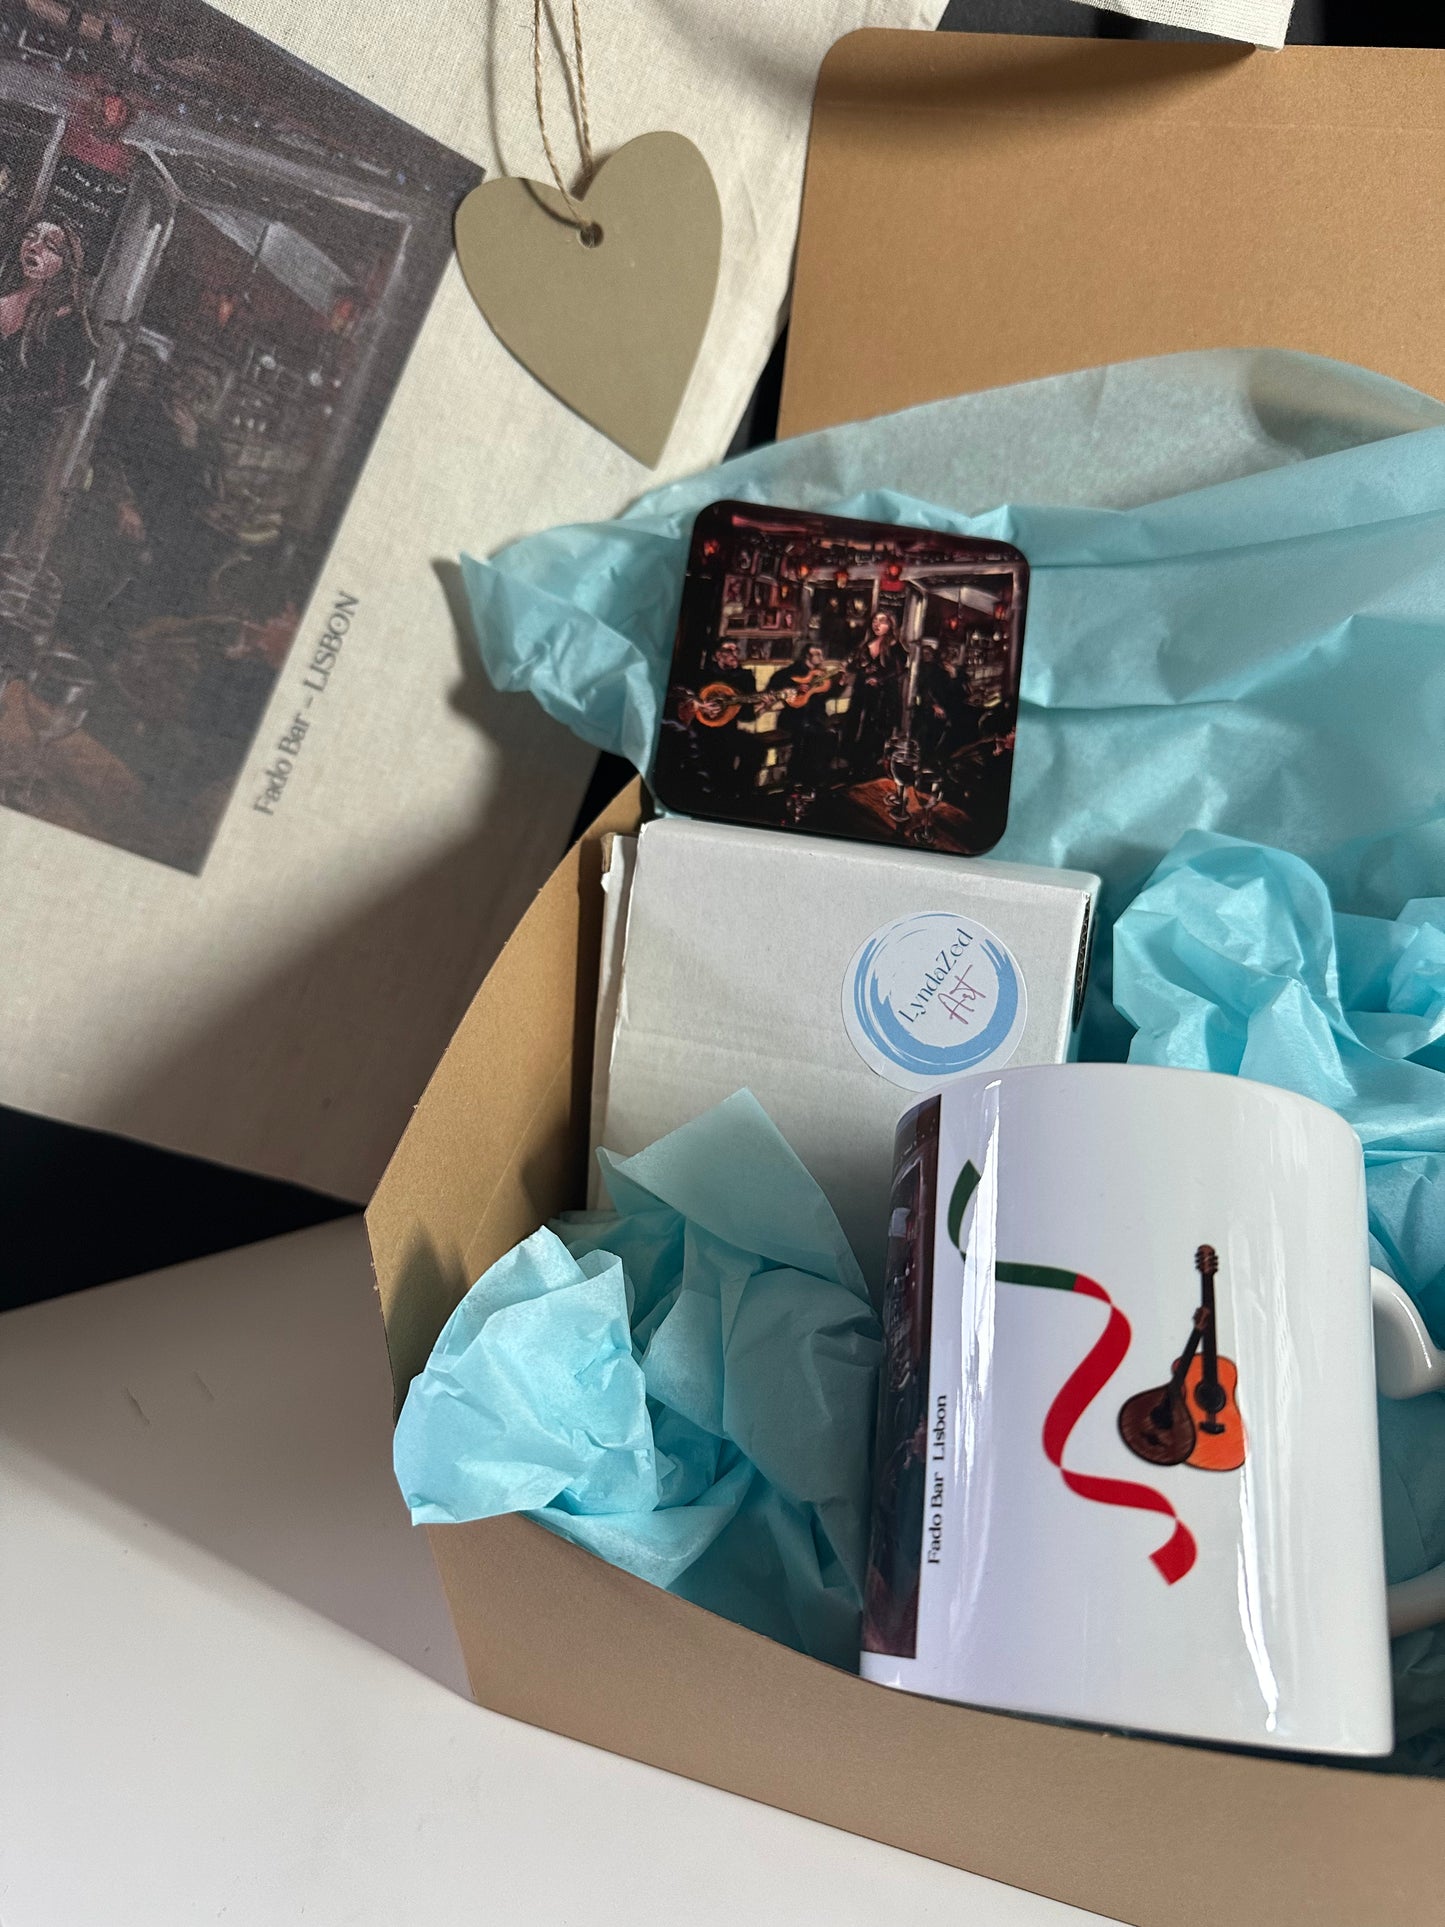 Fado Bar Lisbon  Giftbox showing tote in background, coaster and mug guitar graphics